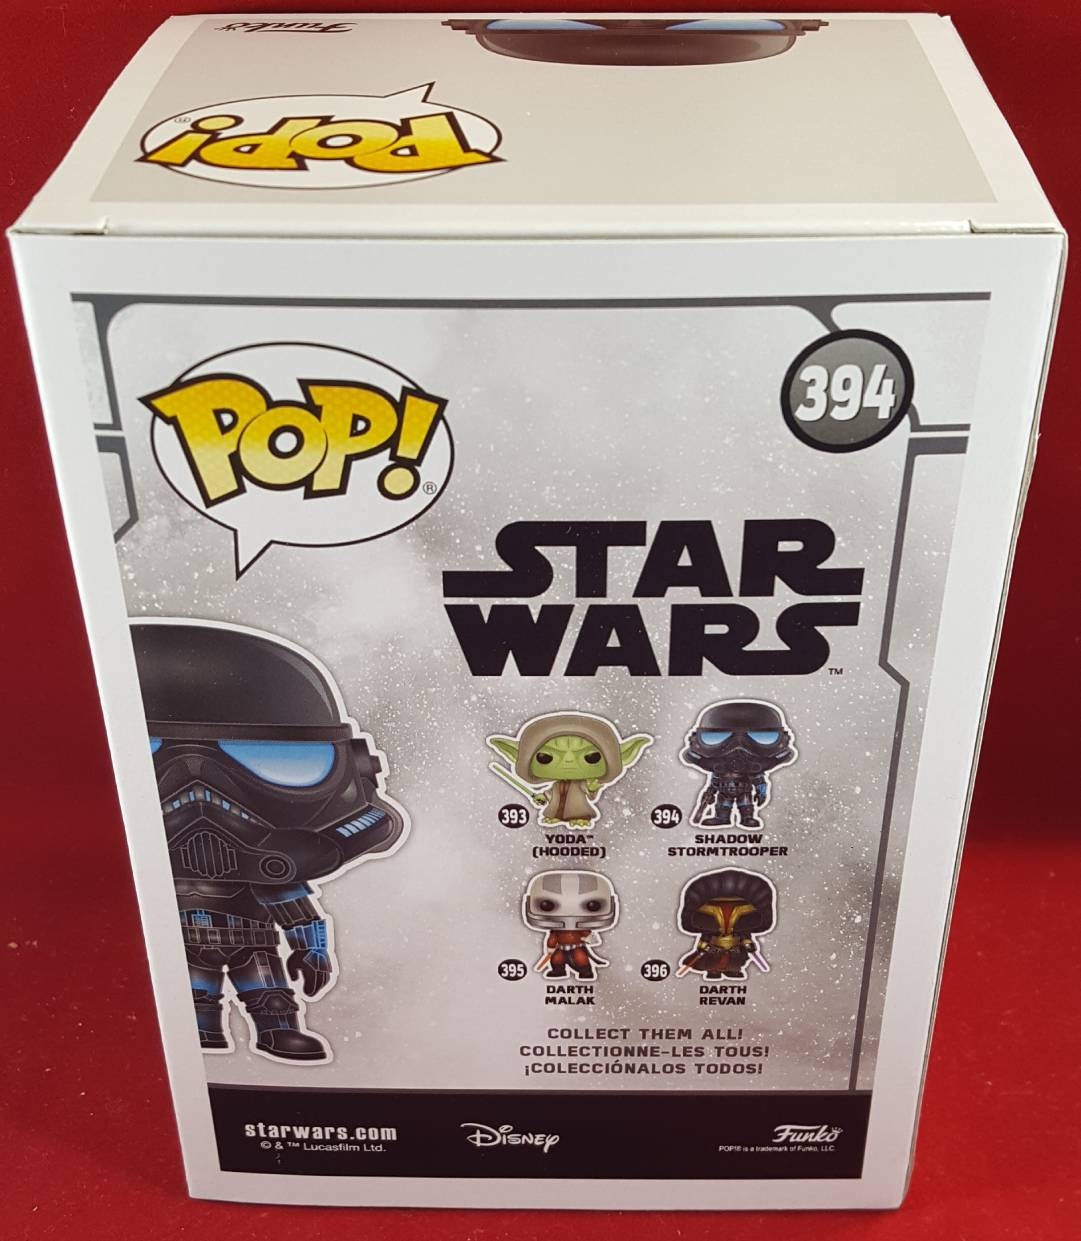 shadow Stormtrooper  gamestop exclusive Funko # 394 Star Wars Pop (nib)